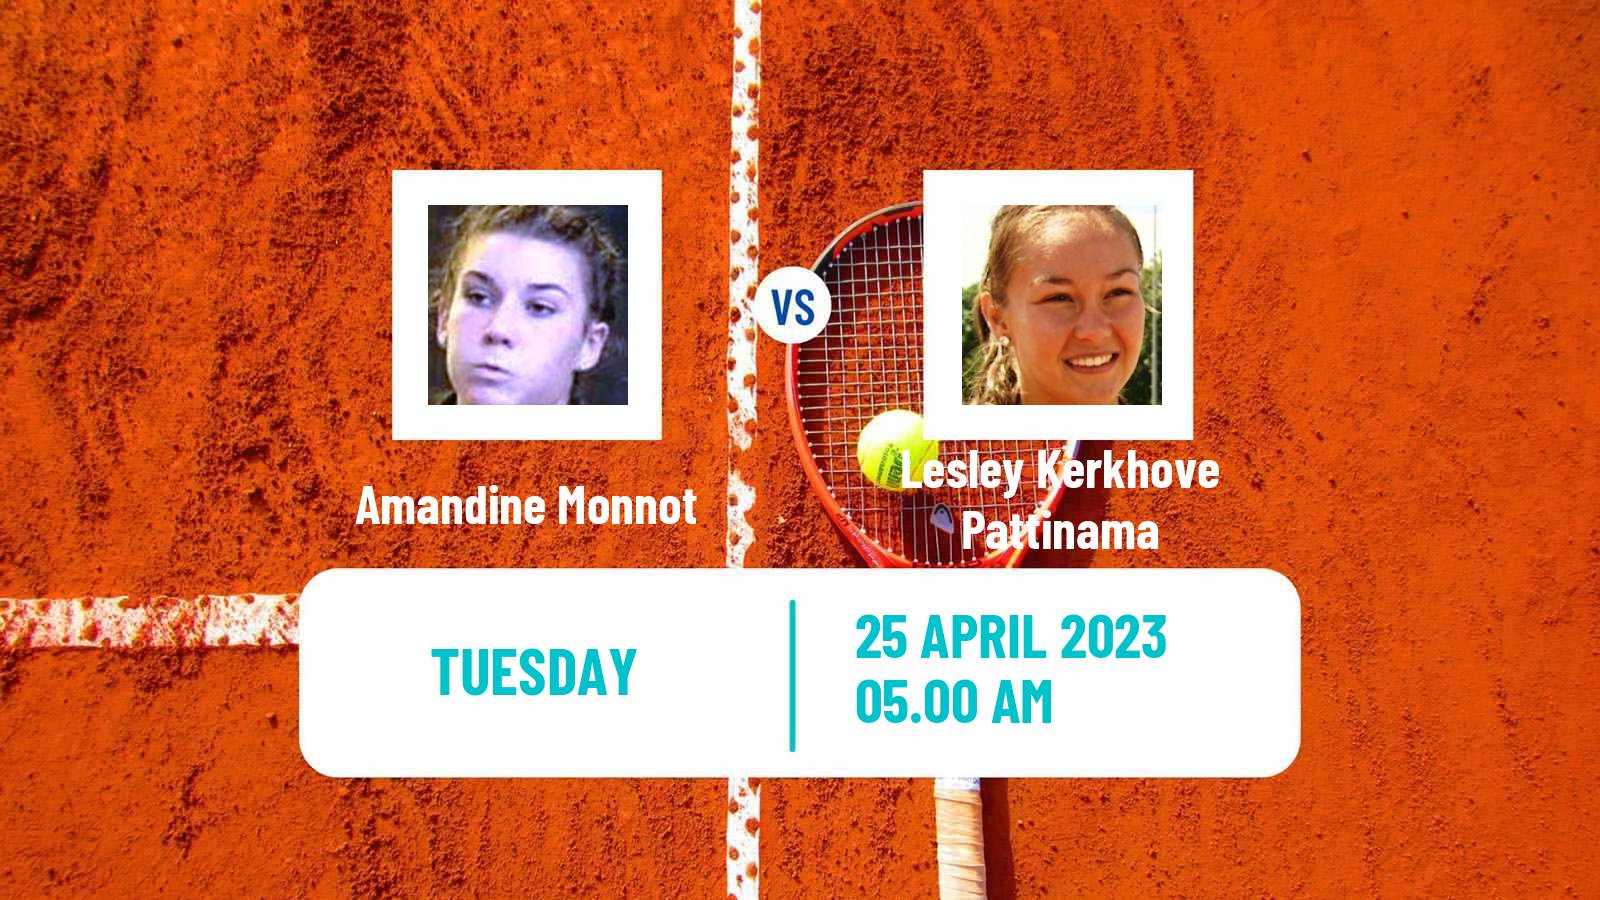 Tennis ITF Tournaments Amandine Monnot - Lesley Kerkhove Pattinama